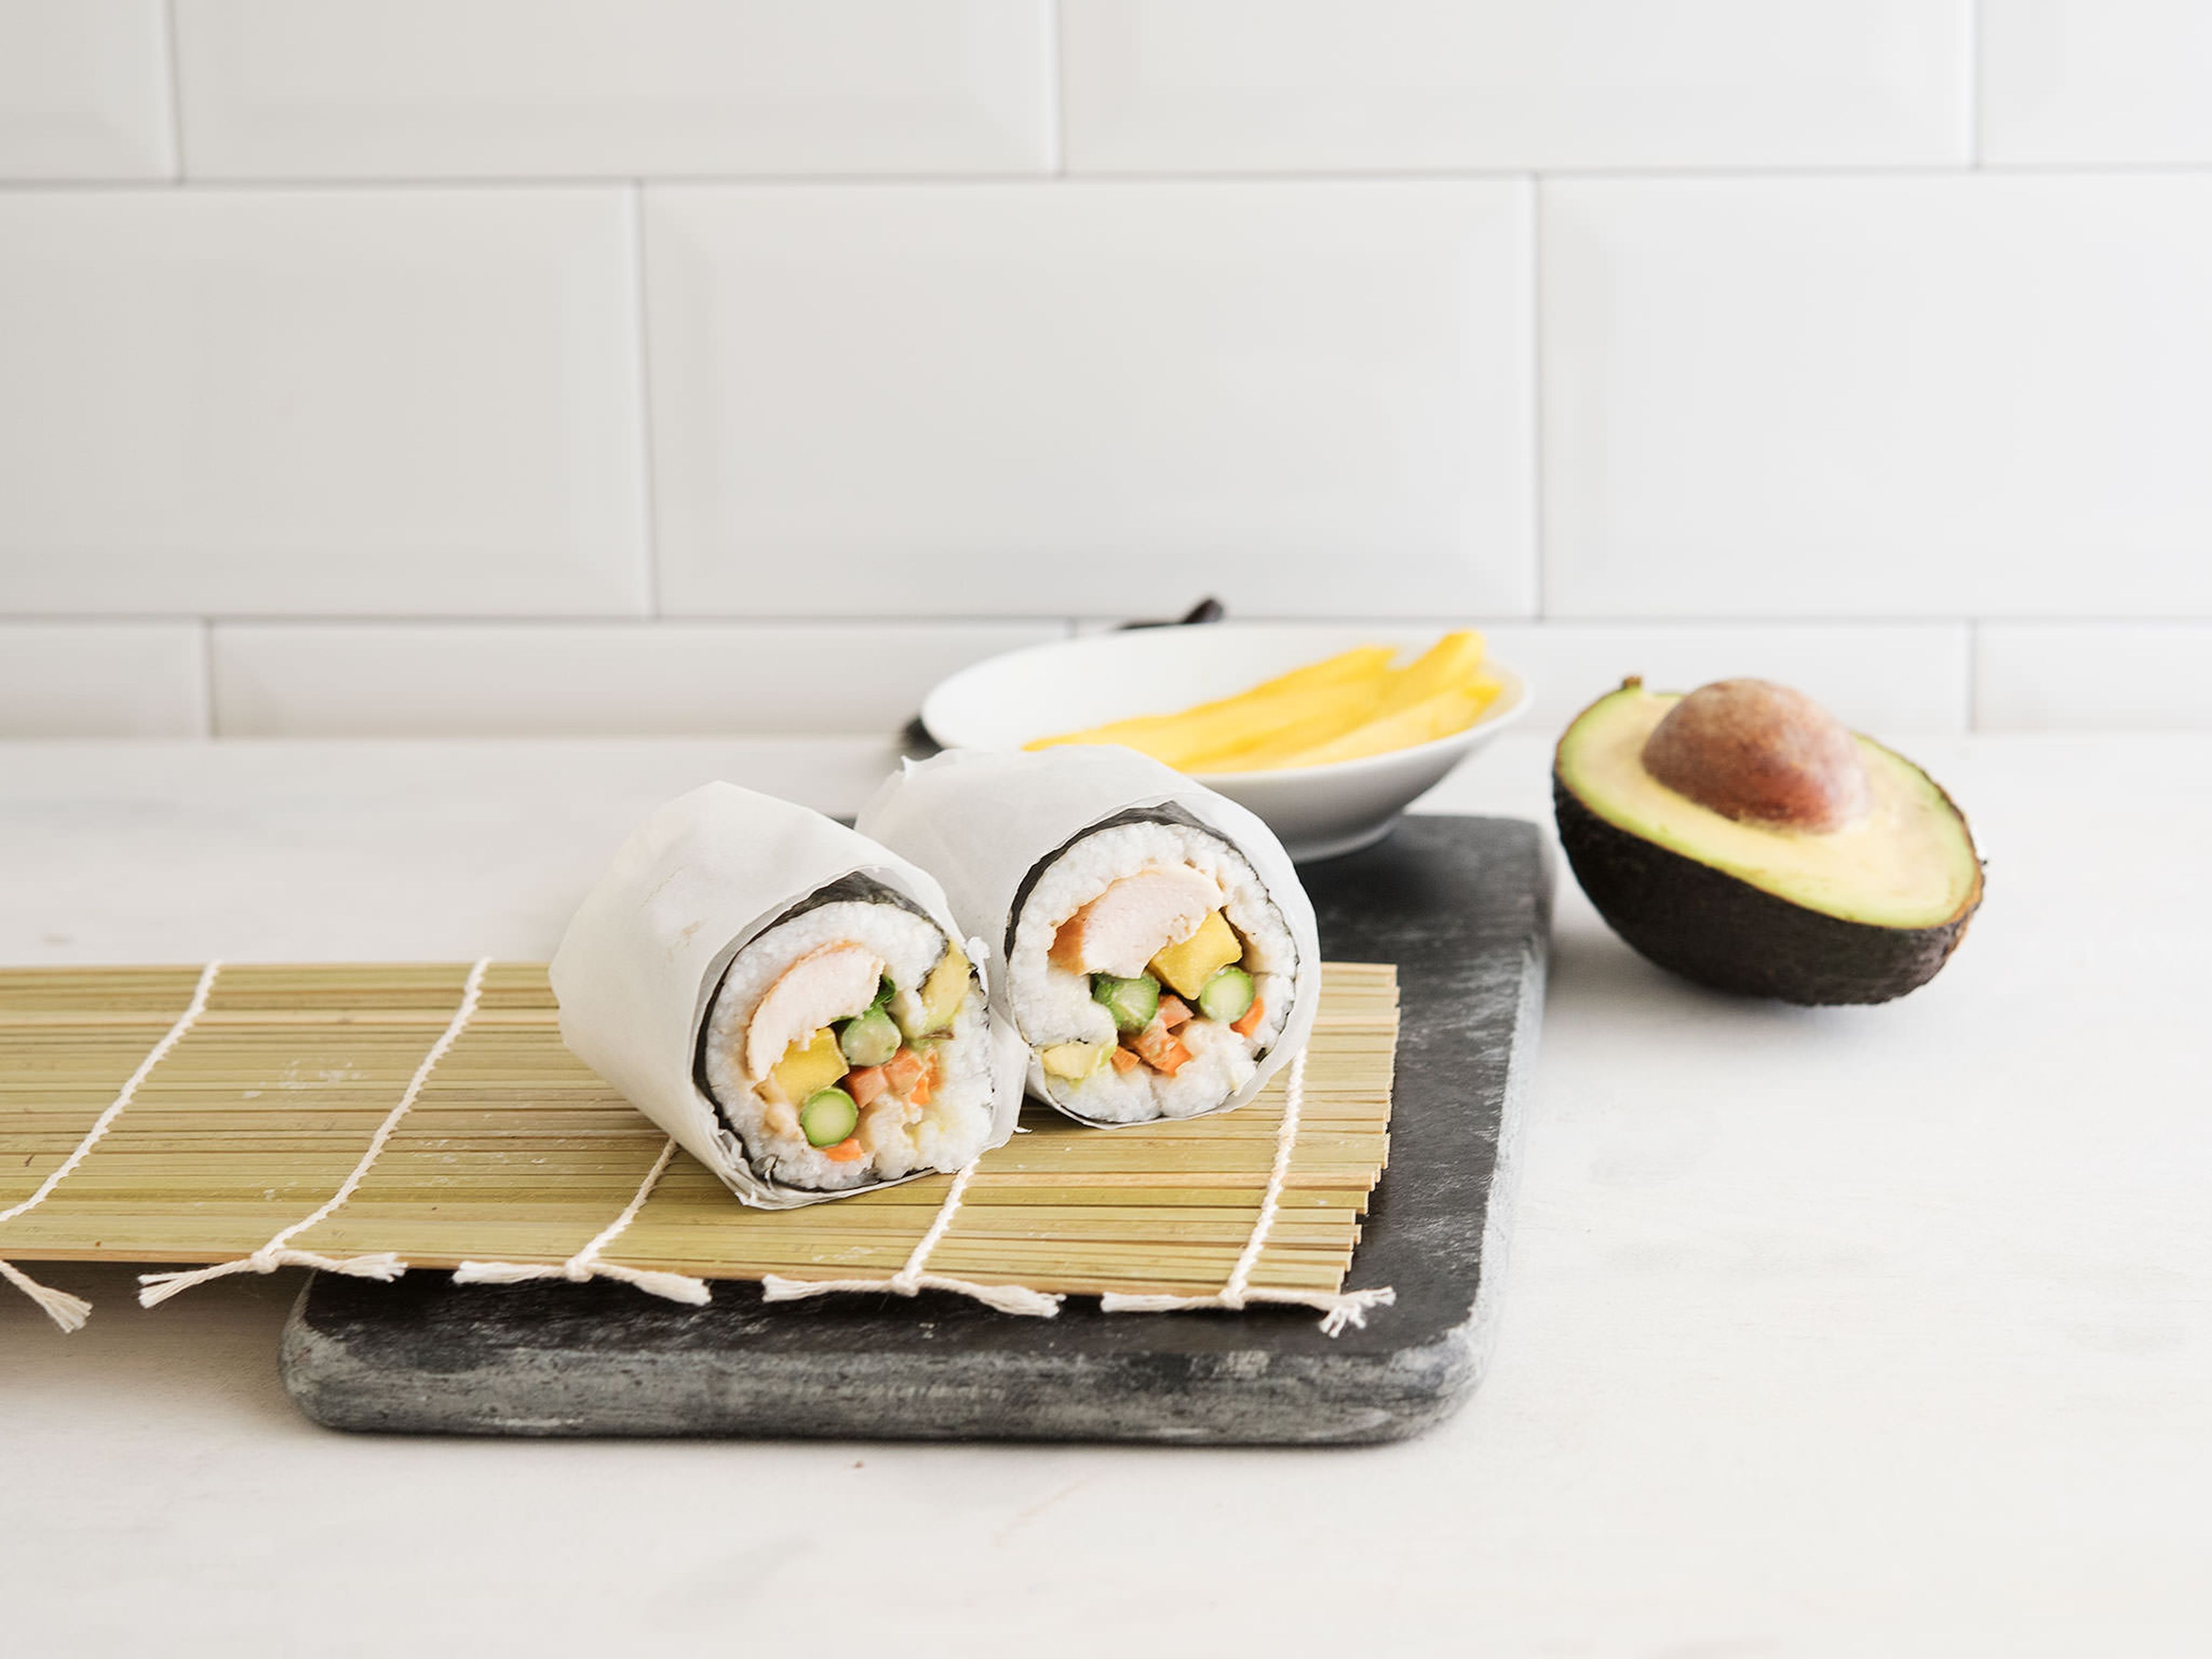 Sushi burrito